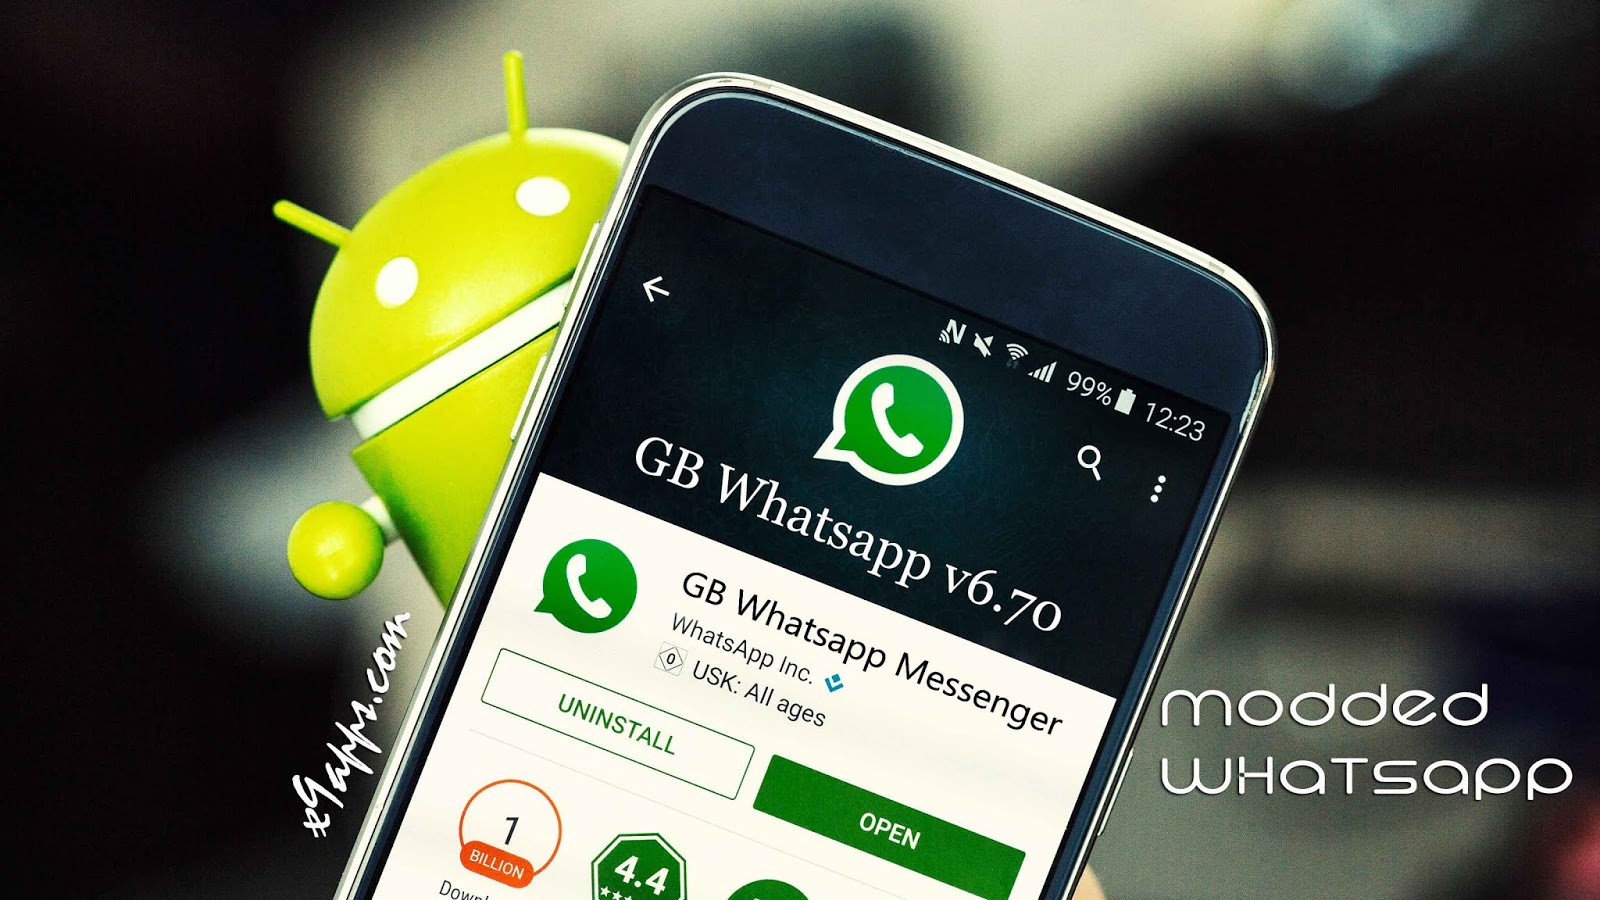 Download Gb Whatsapp V6 - Whatsapp Update , HD Wallpaper & Backgrounds